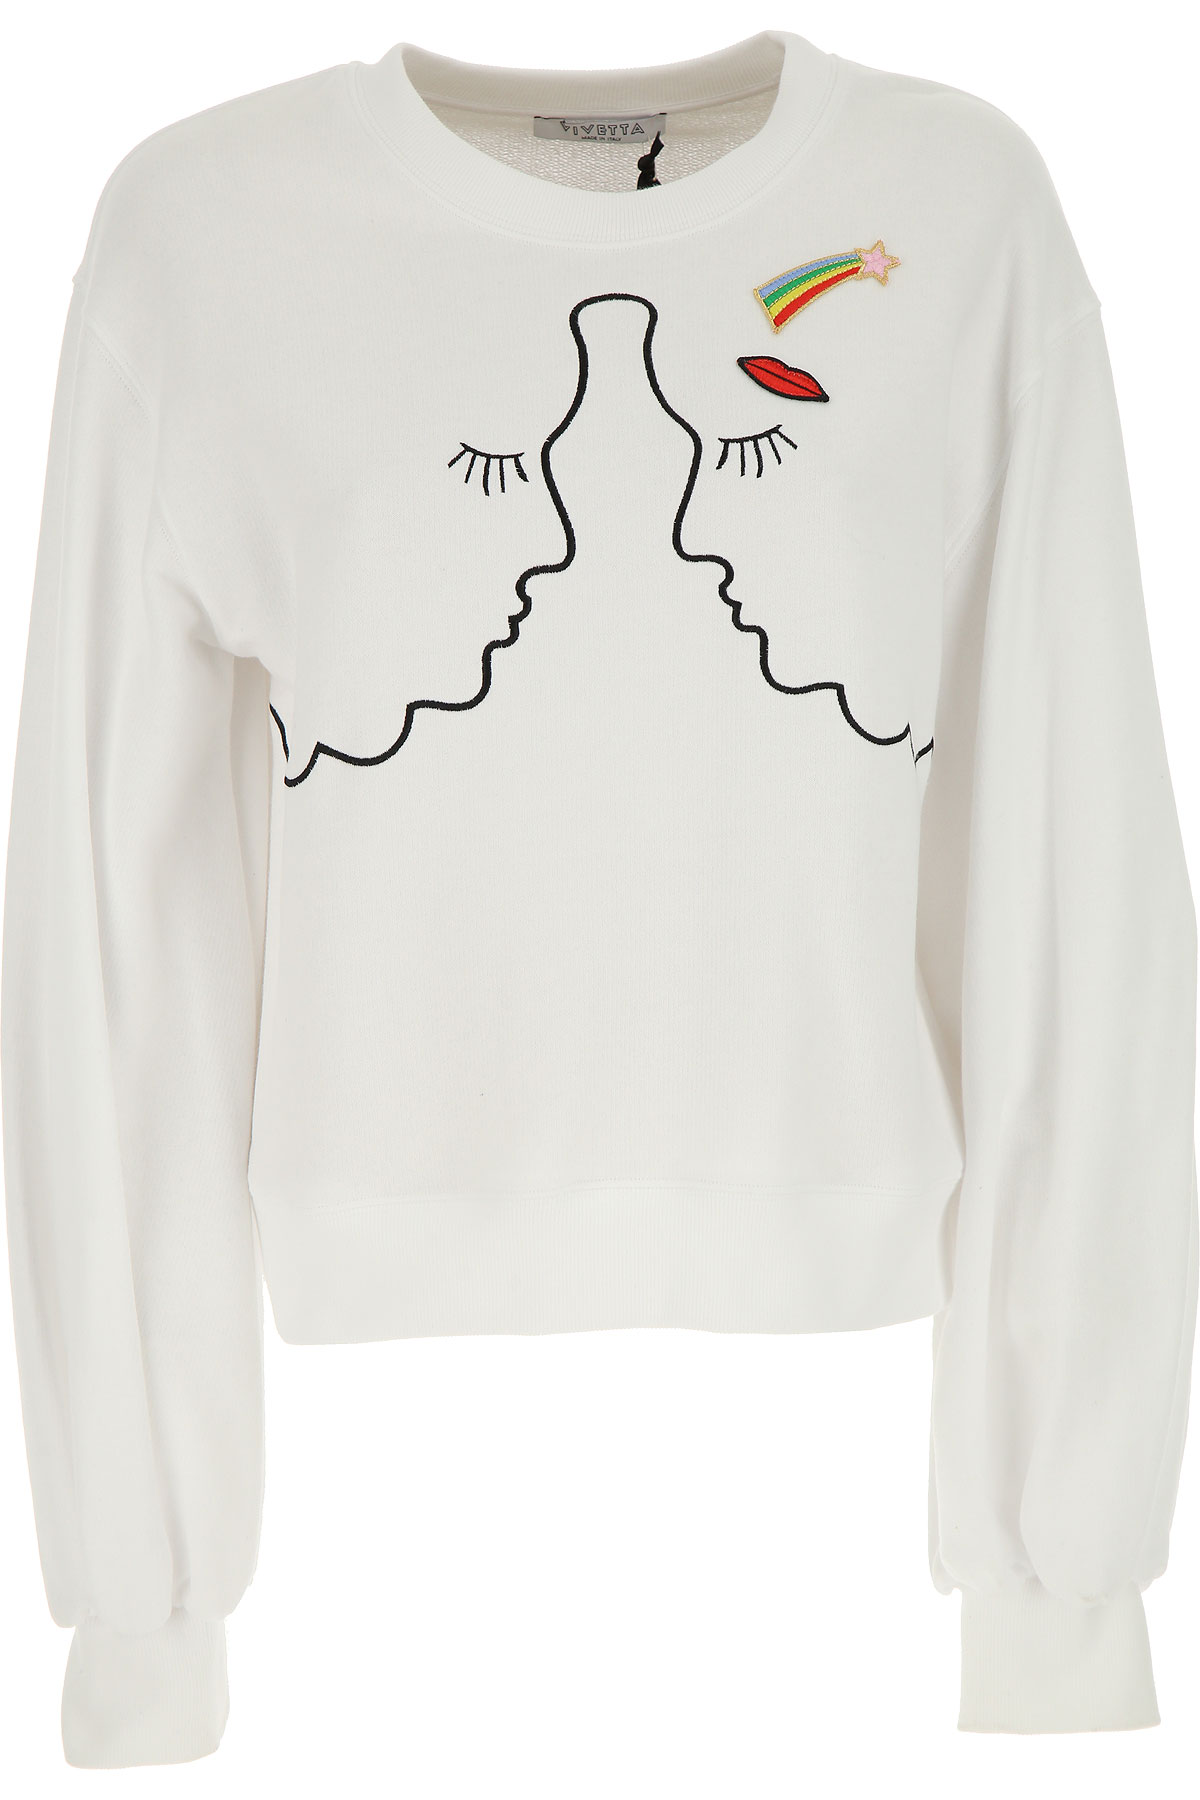 Vivetta Sweatshirt for Women, Blanc, Coton, 2017, 38 40 42